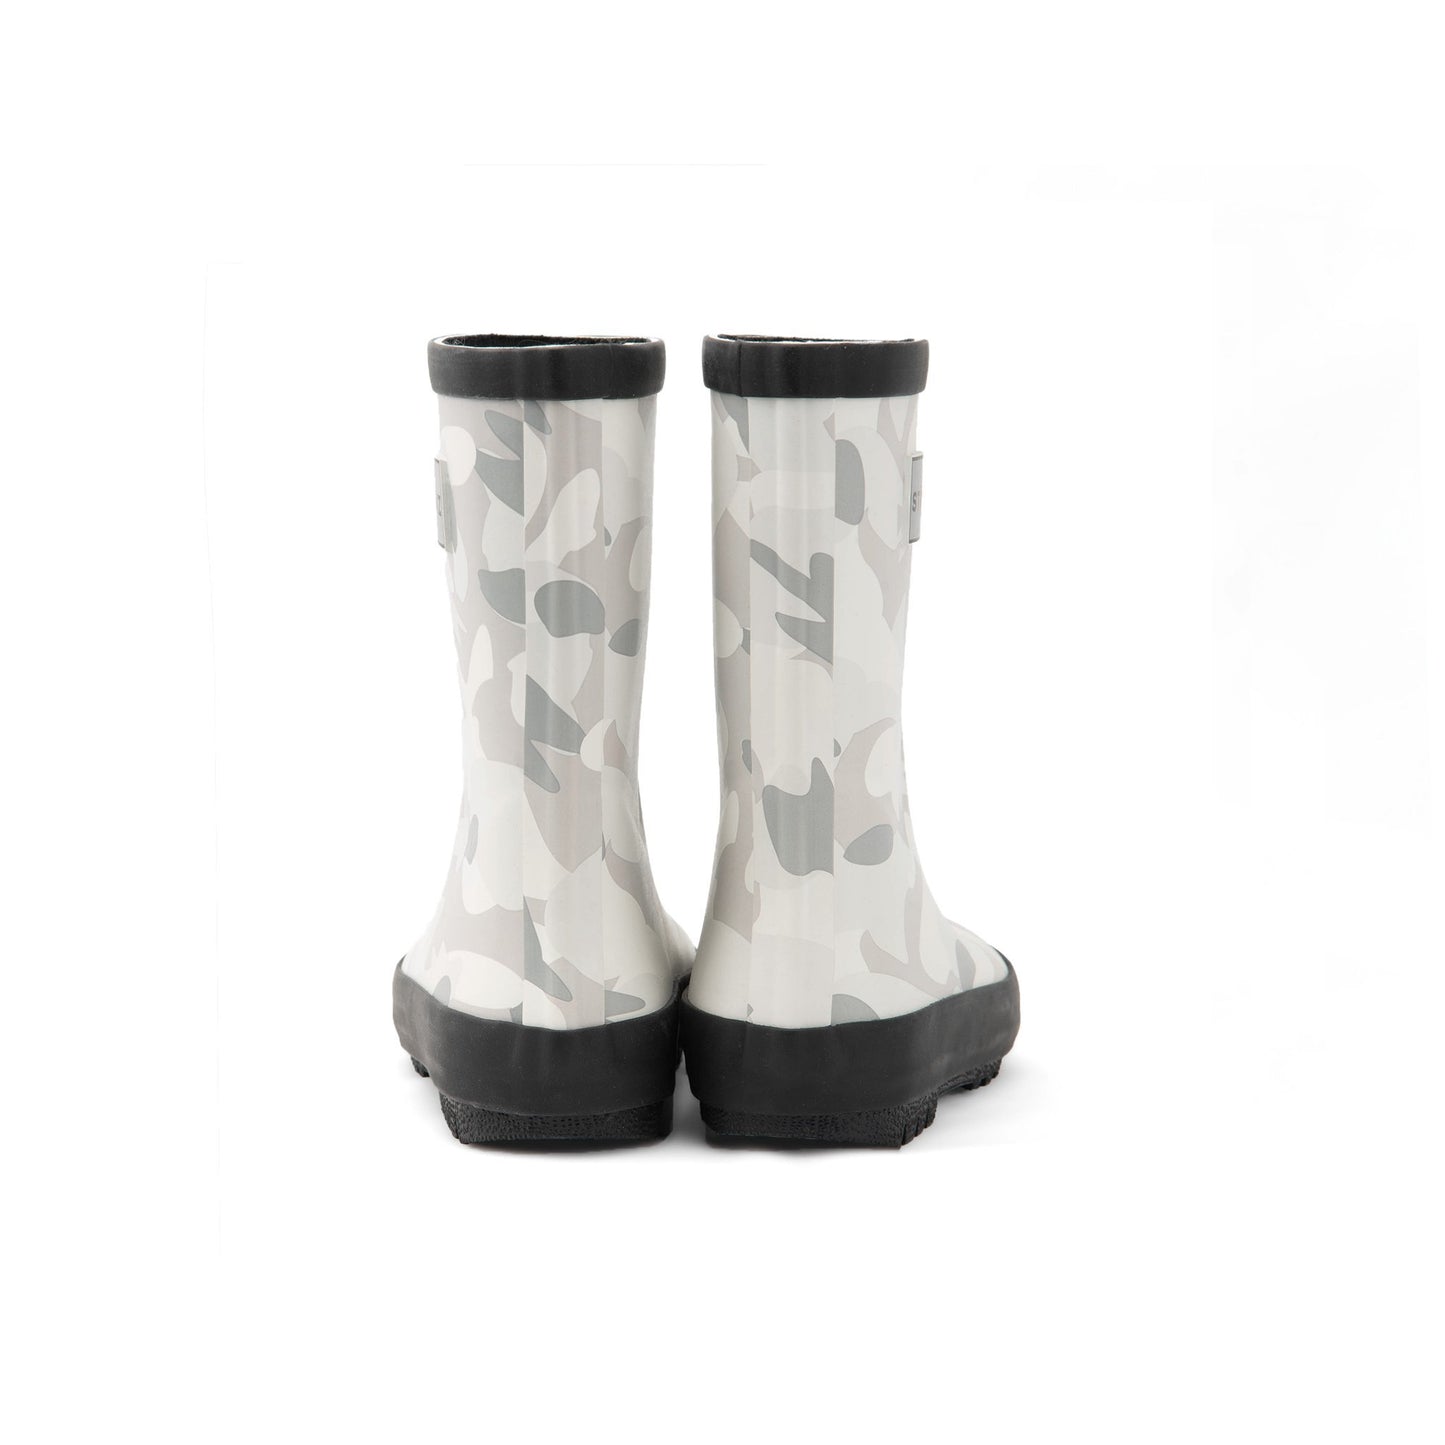 Kid's Stonz rubber Rain Boots in light grey camo print